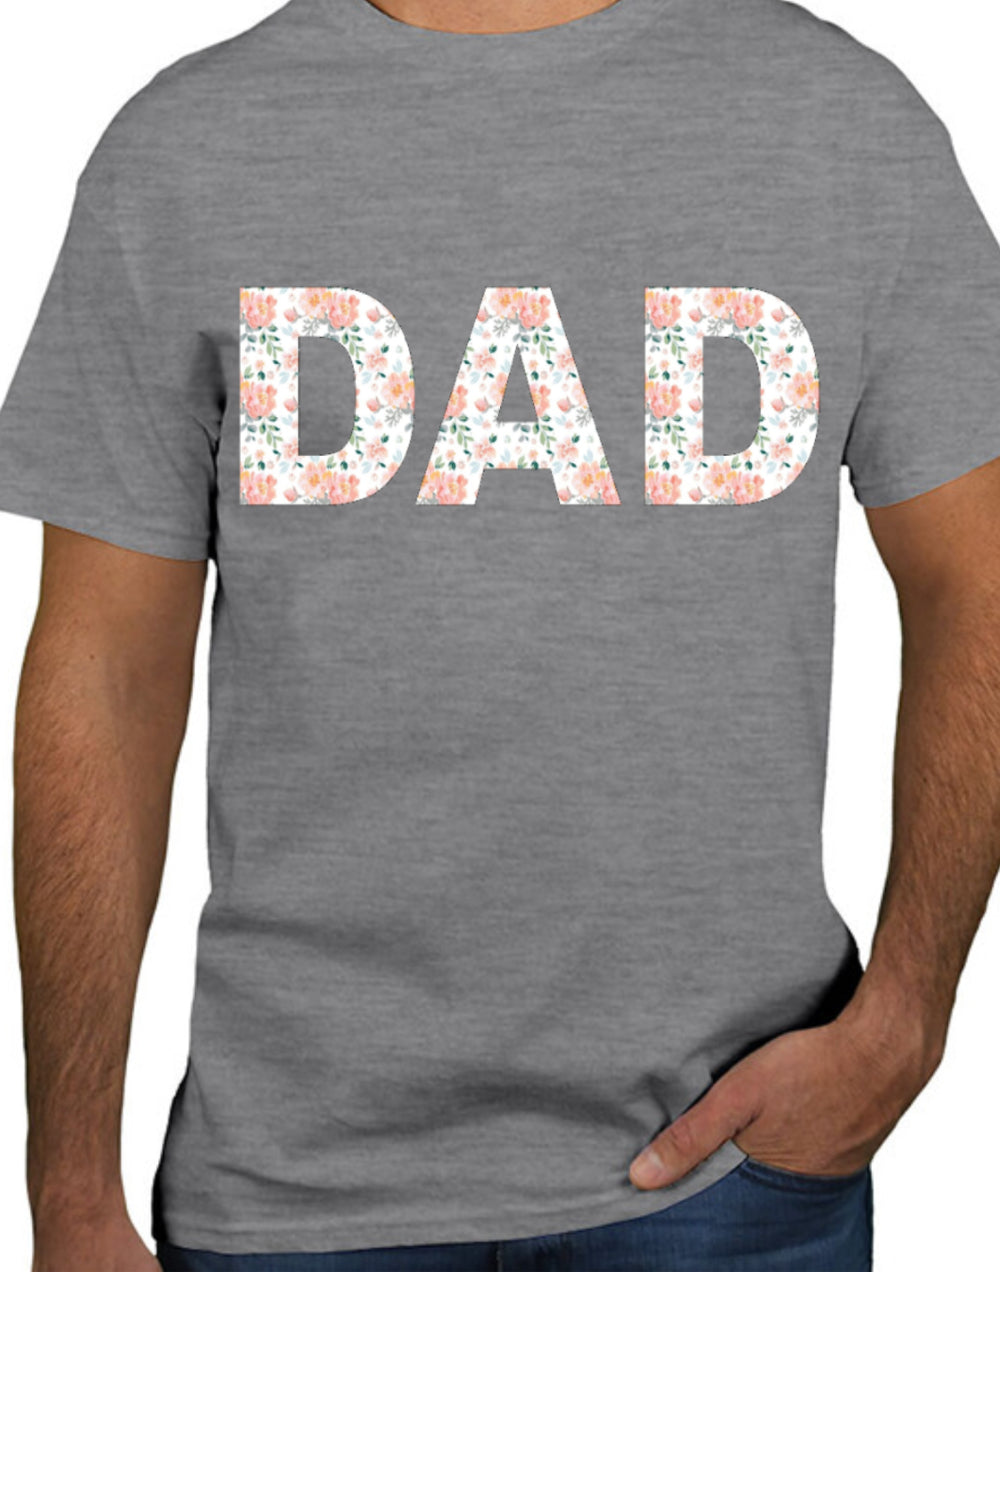 Mila Dad T-shirt